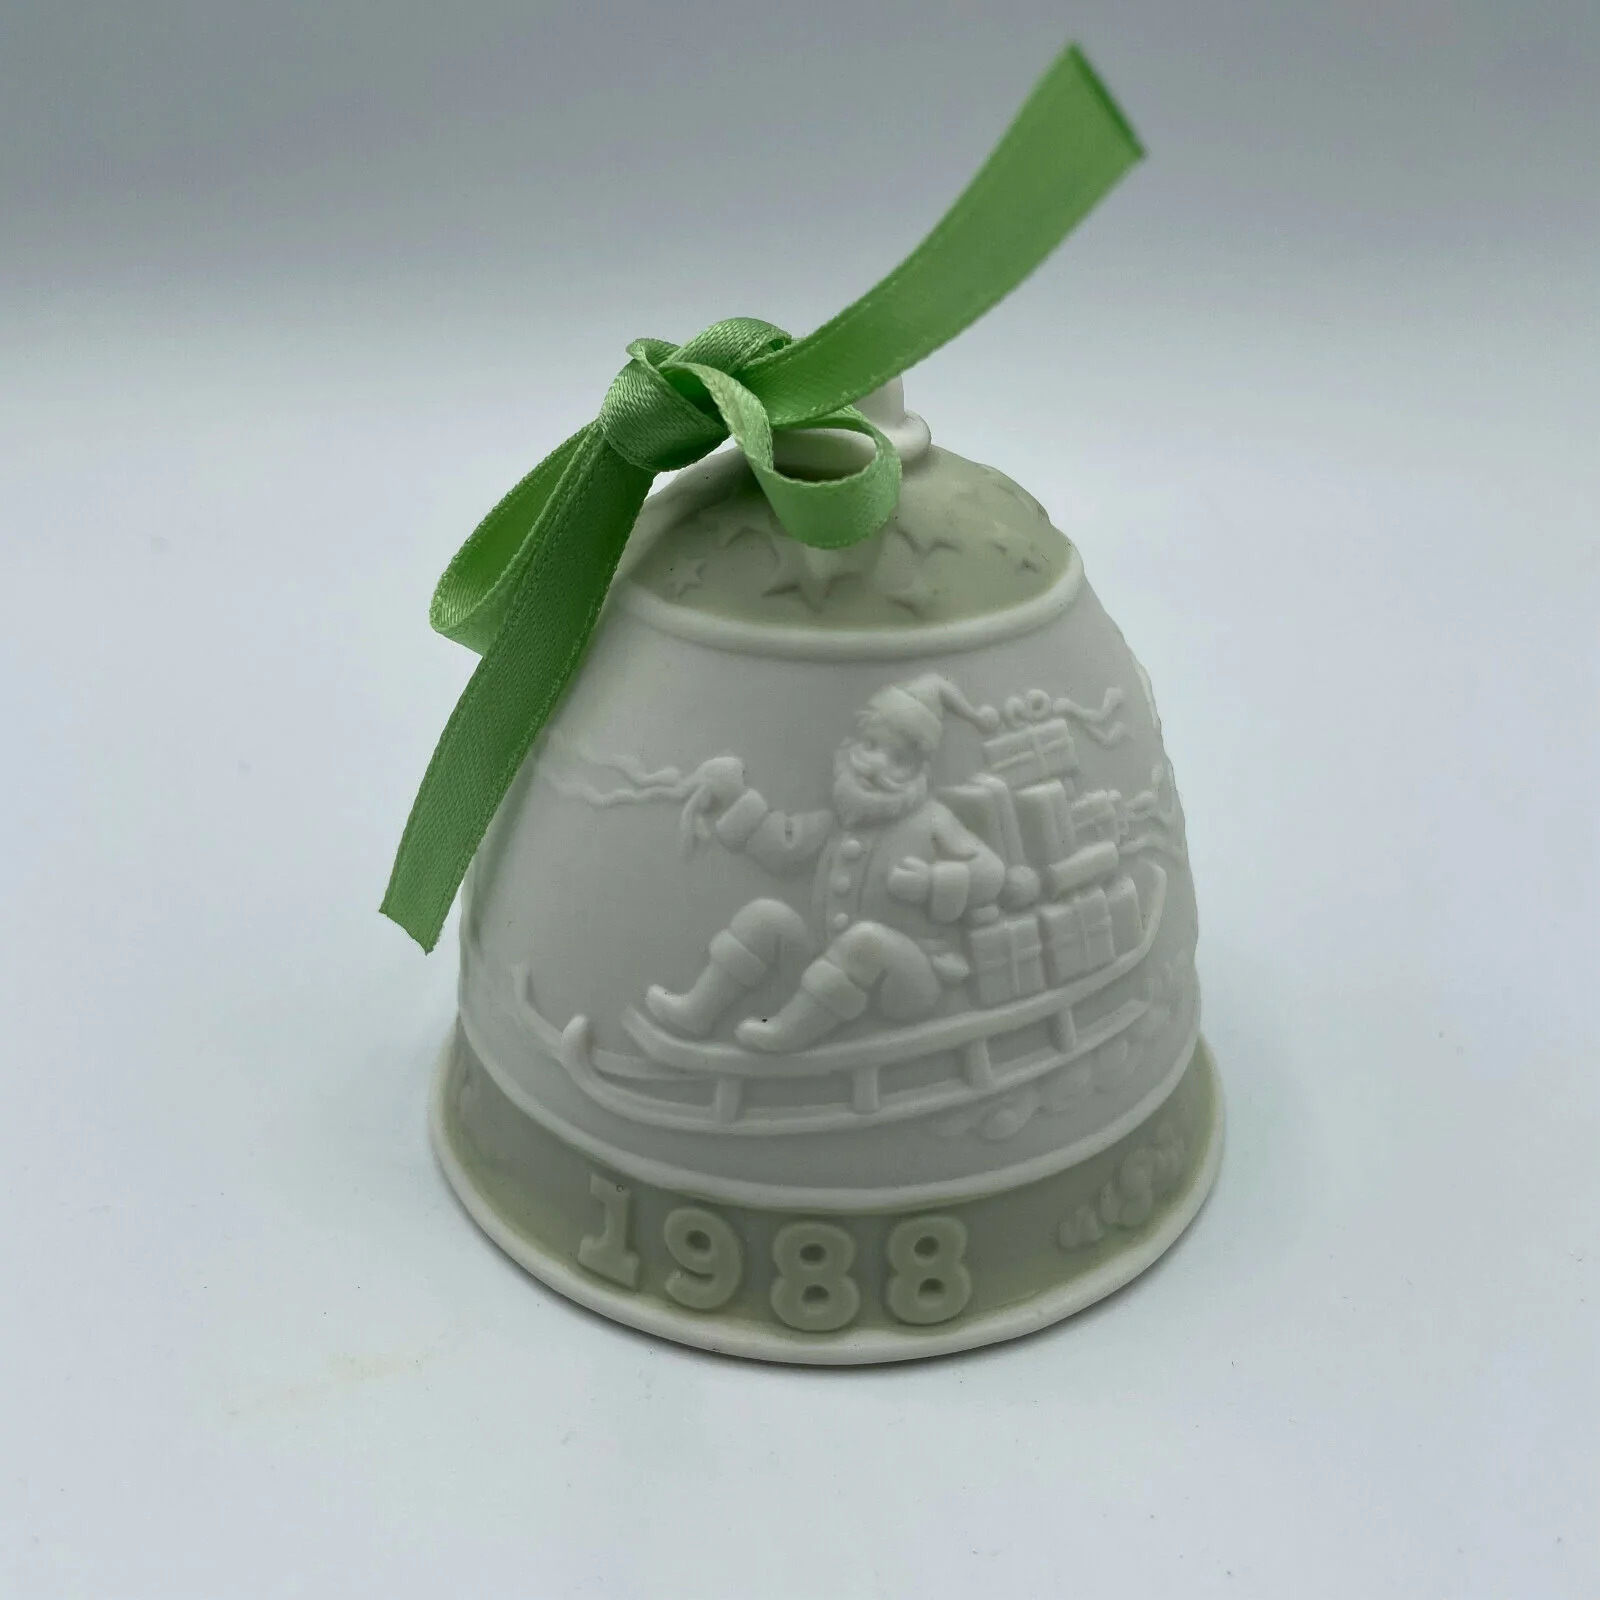 Vintage Lladro 1988 Holiday Porcelain Bell Ornament